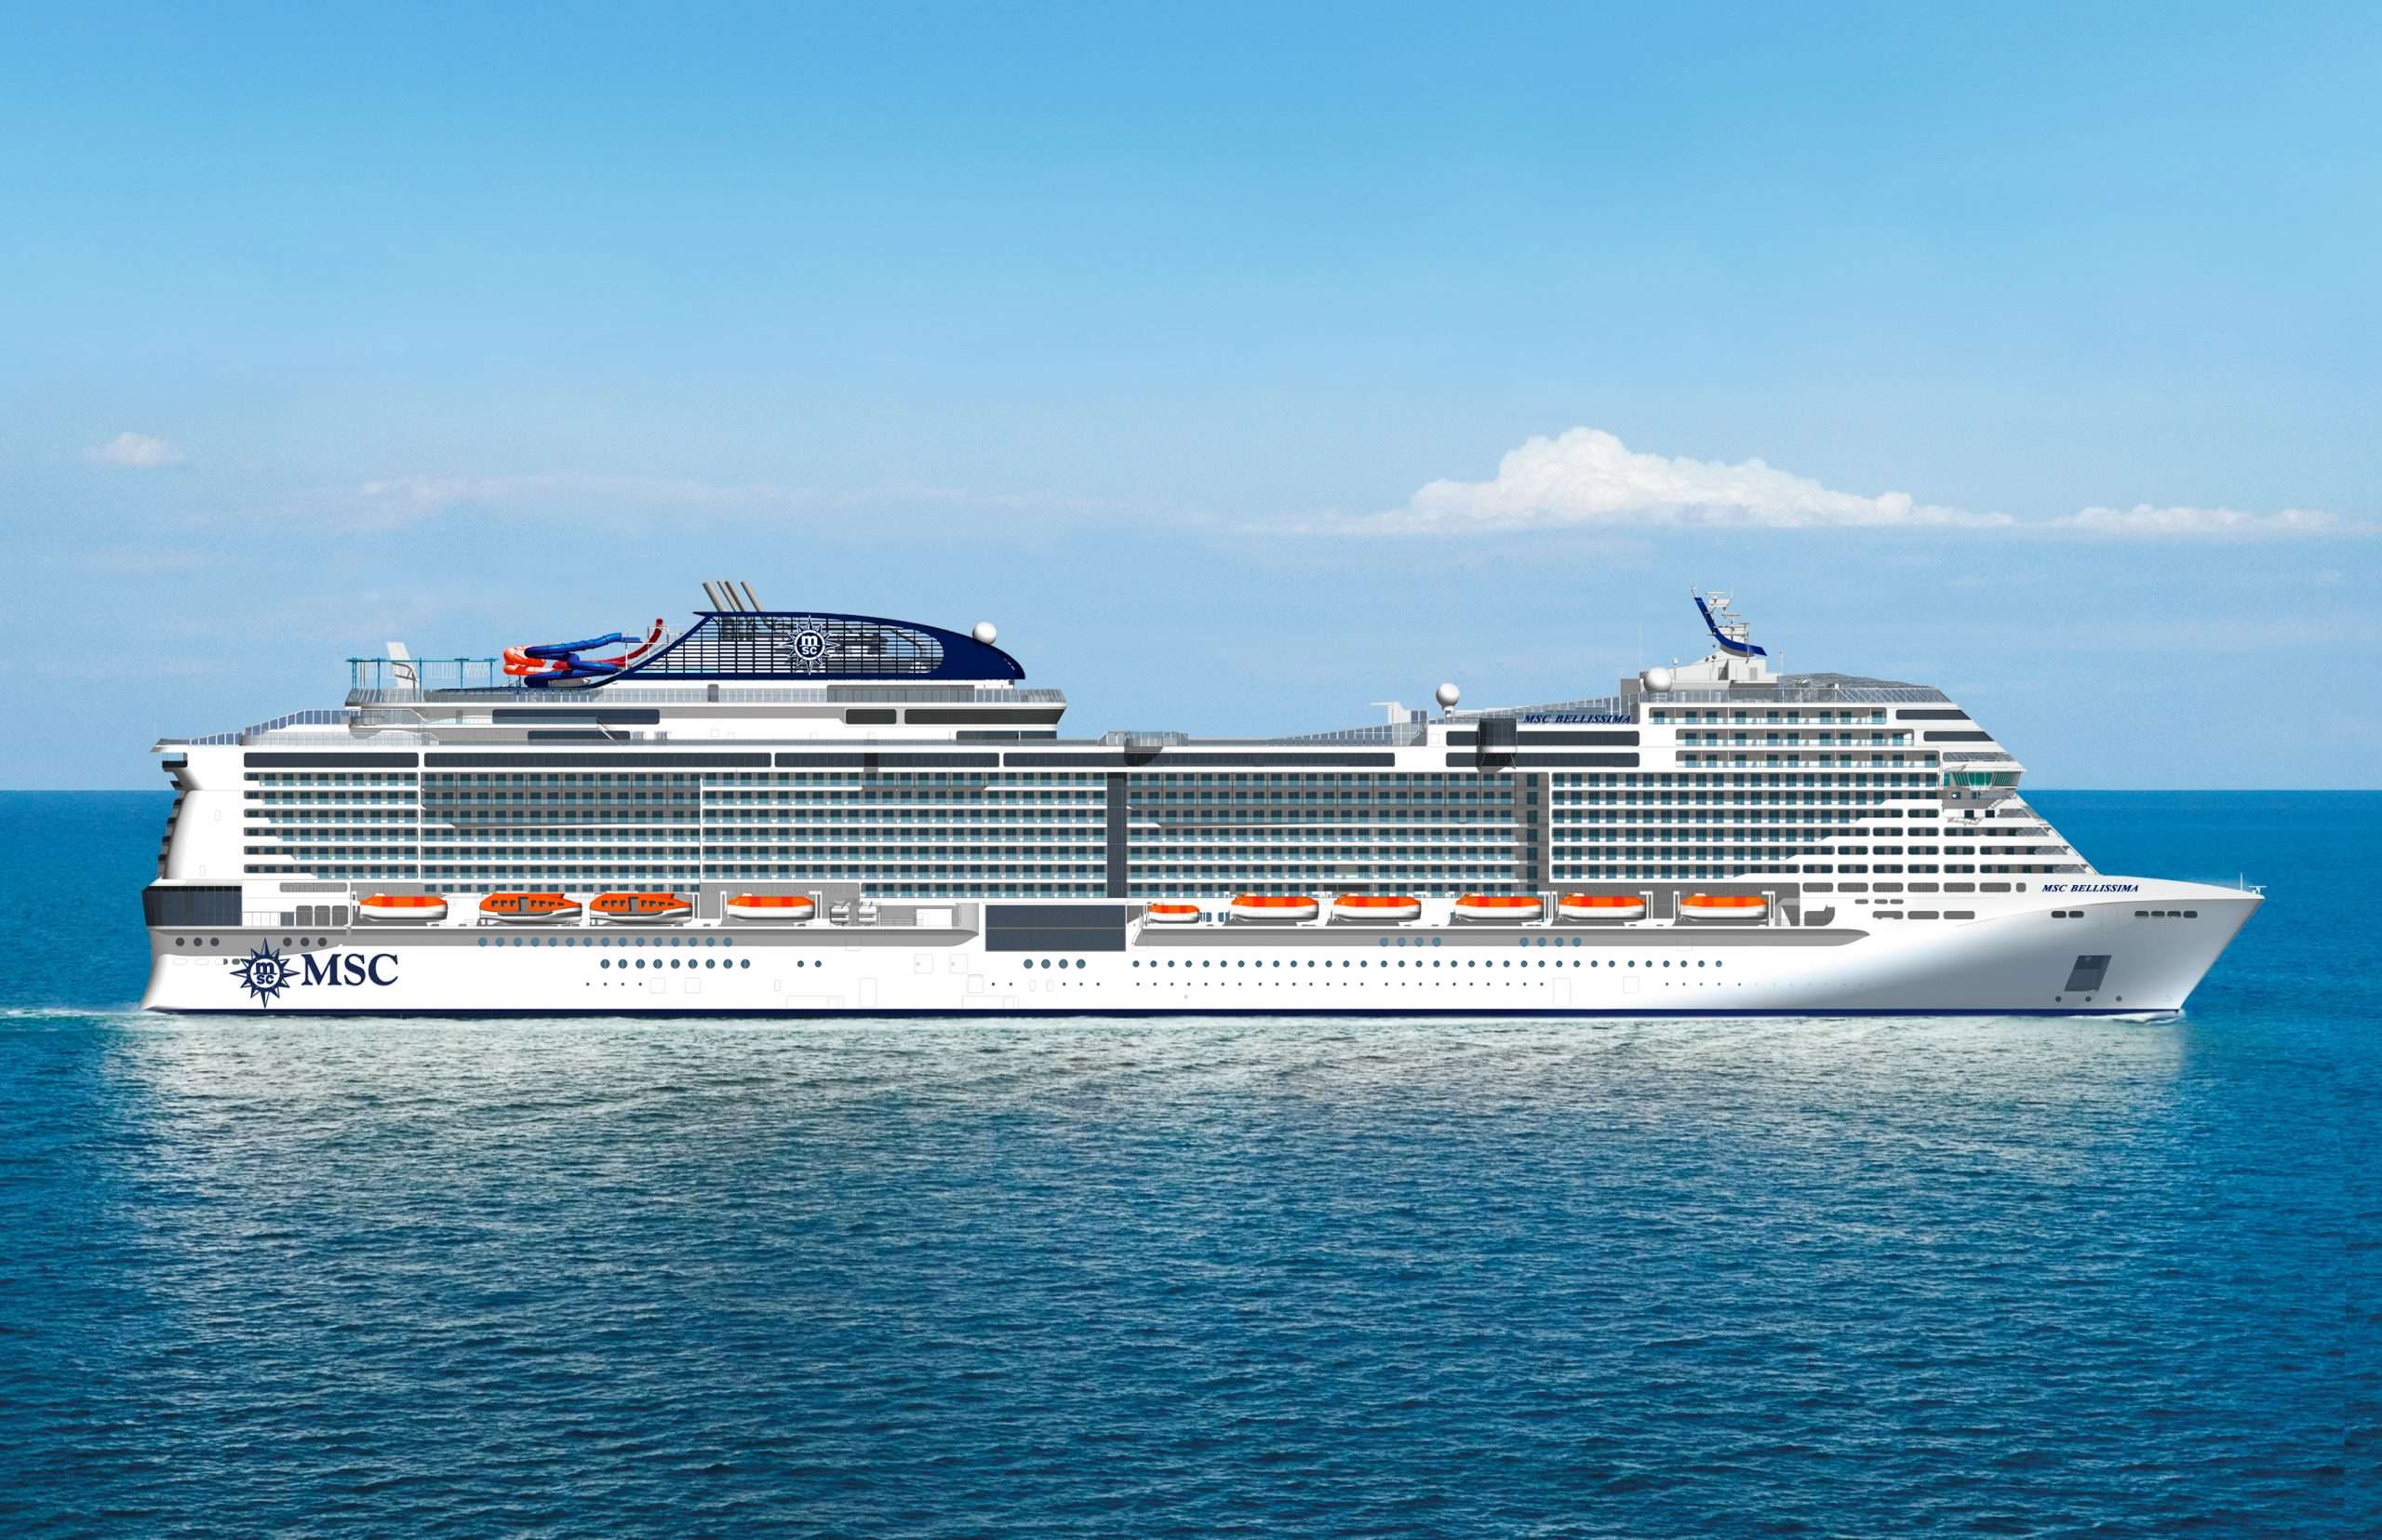 designersfinaltouch: Who Owns Msc Cruises